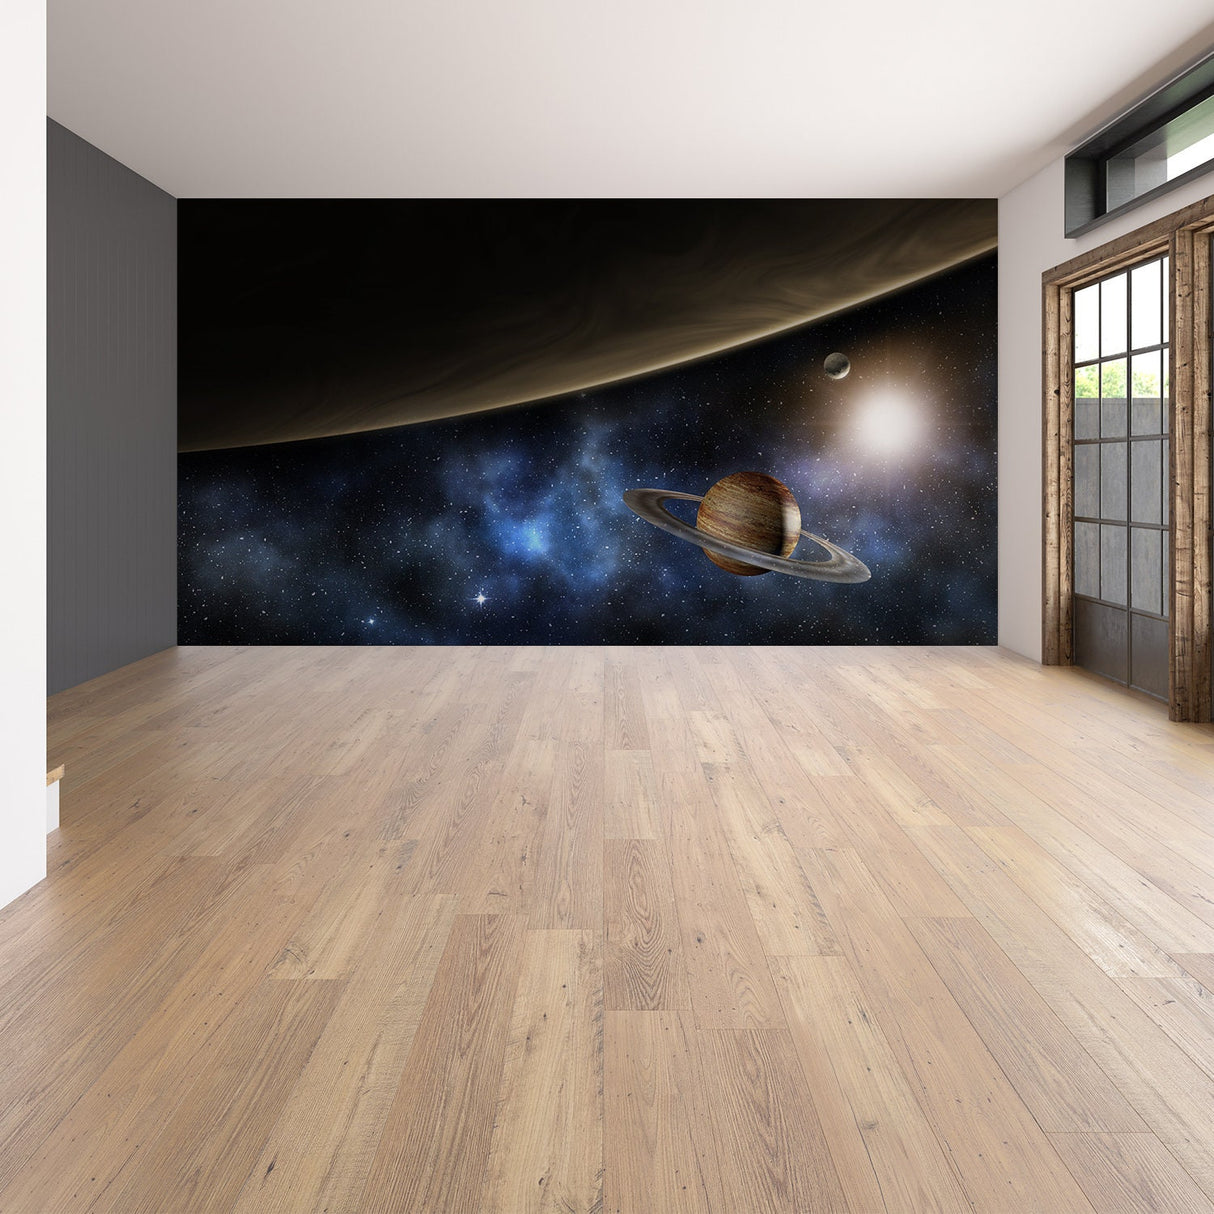 Deep Outer Space Wallpaper Art Decor Decal - 3d Galaxy Kid Nursery Room Removable Wall Sticker